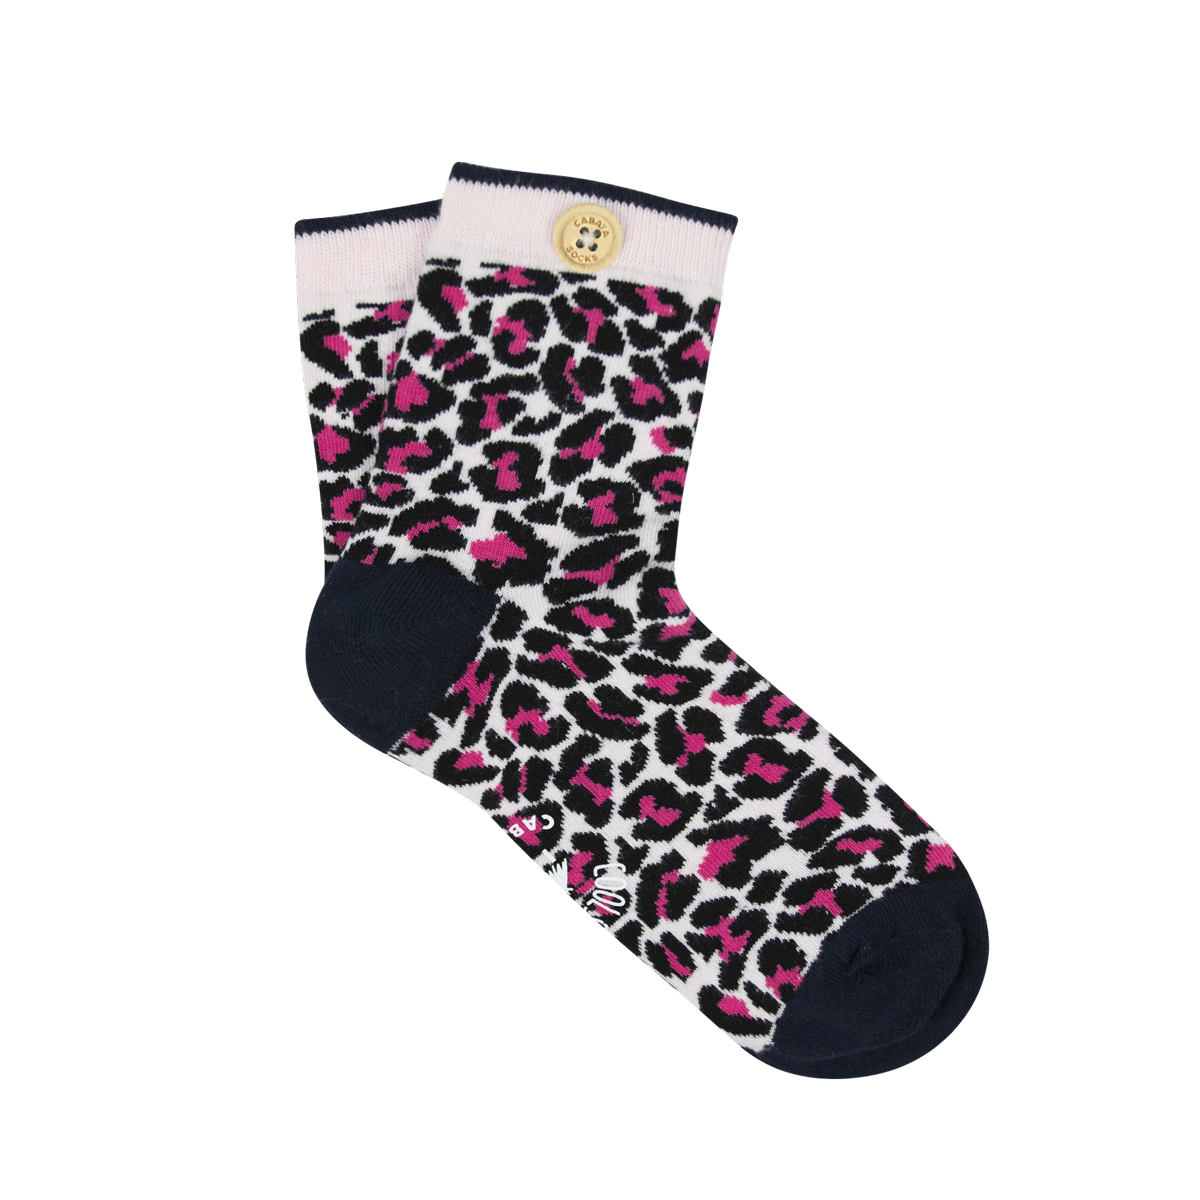 unloosable-socks-button-women-36-41-socks20-ambr-pin